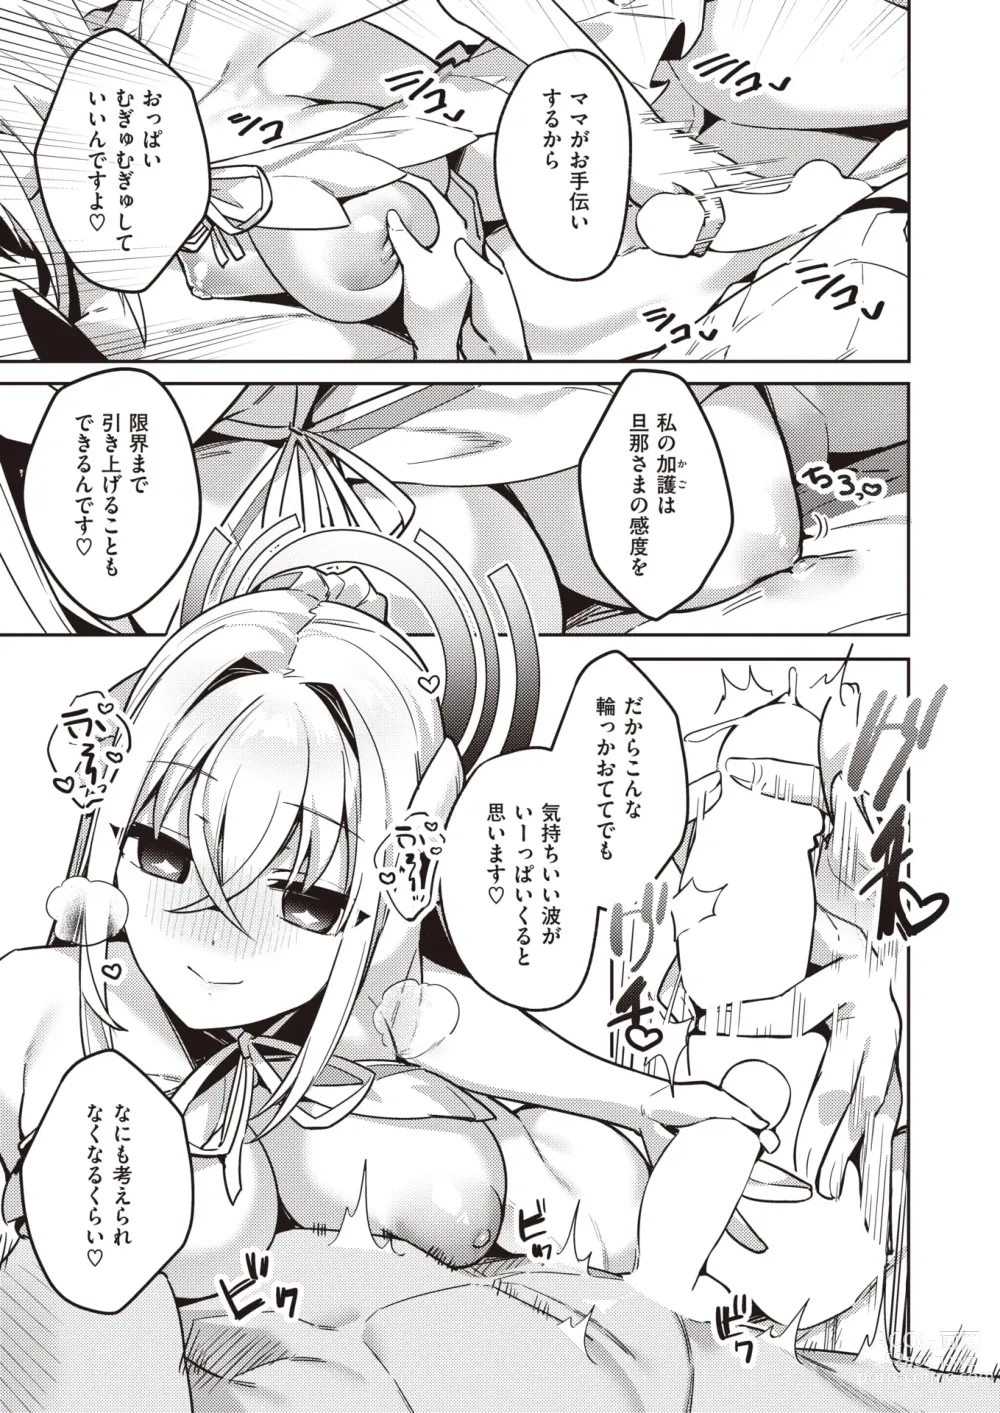 Page 52 of manga Isekai Rakuten Vol. 29